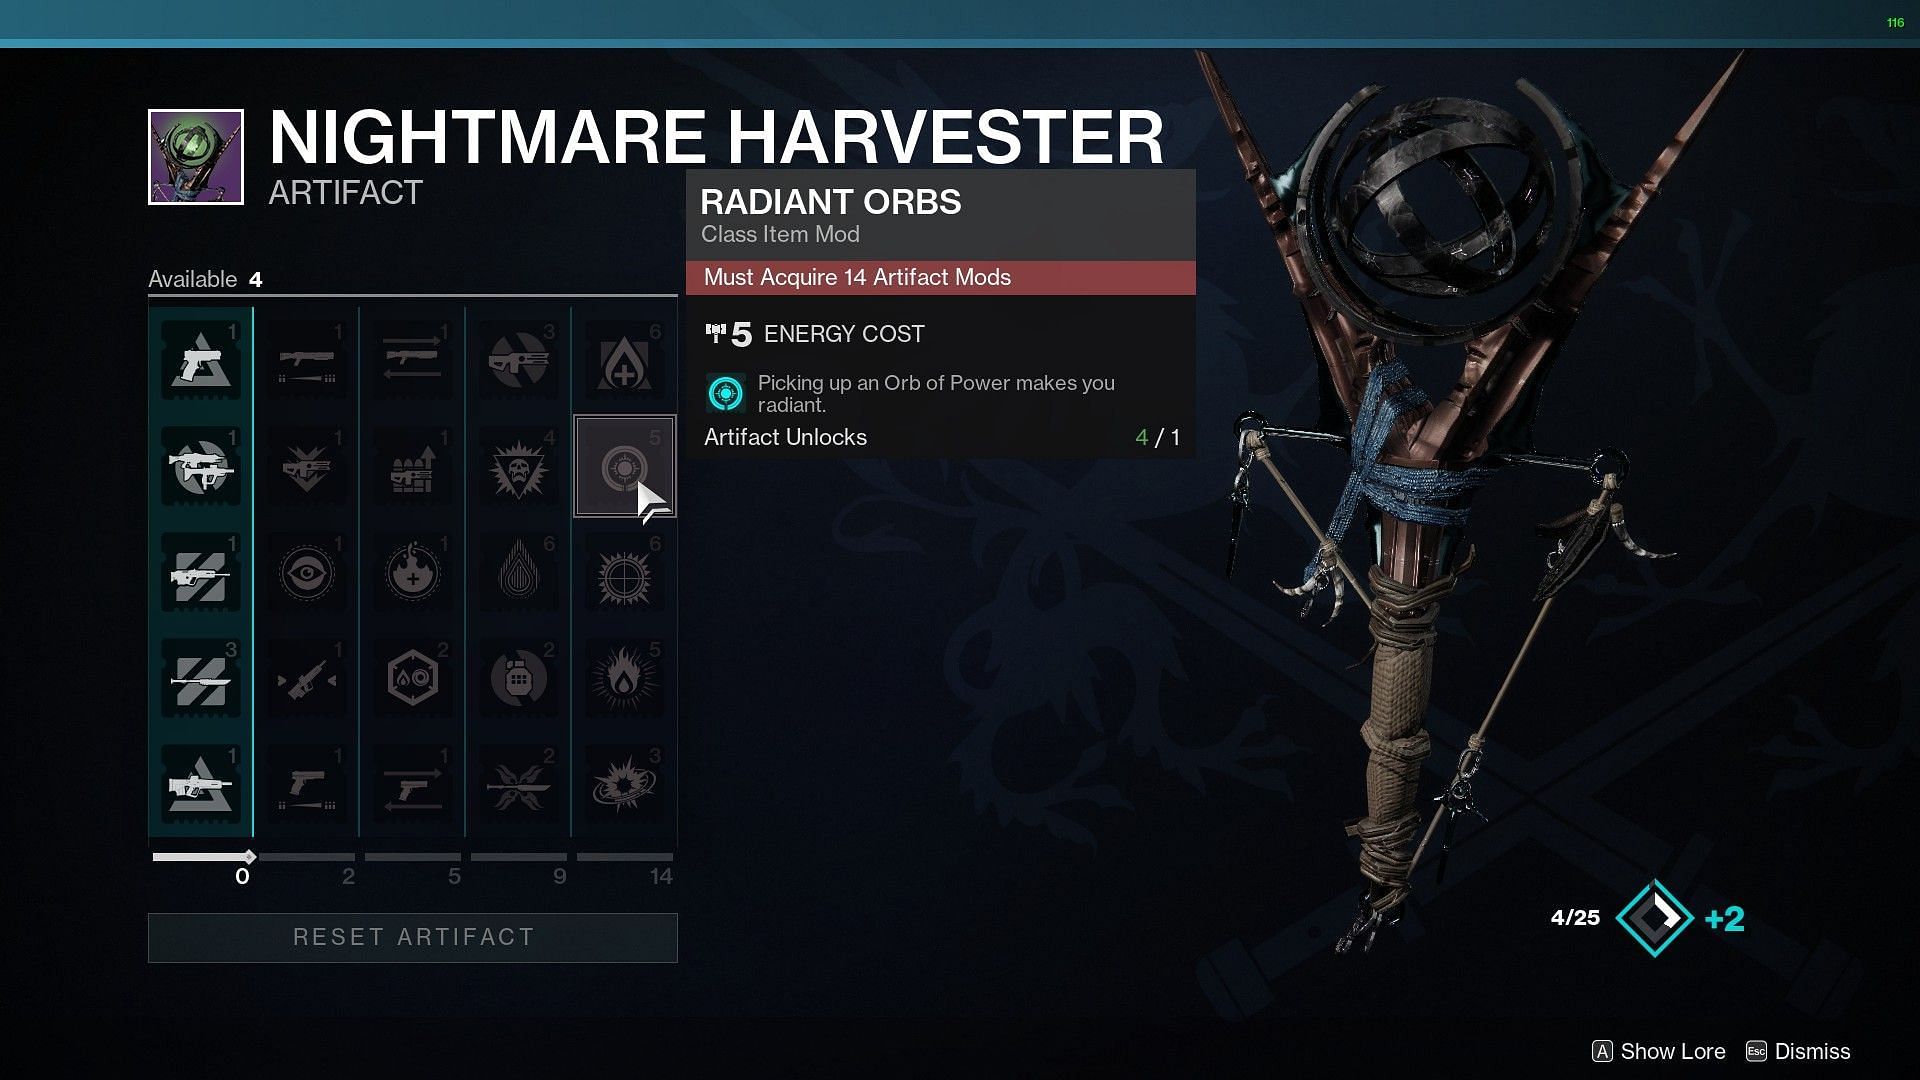 One of the high energy mods in the Nightmare Harvester seasonal artifact (Image via Destiny 2)